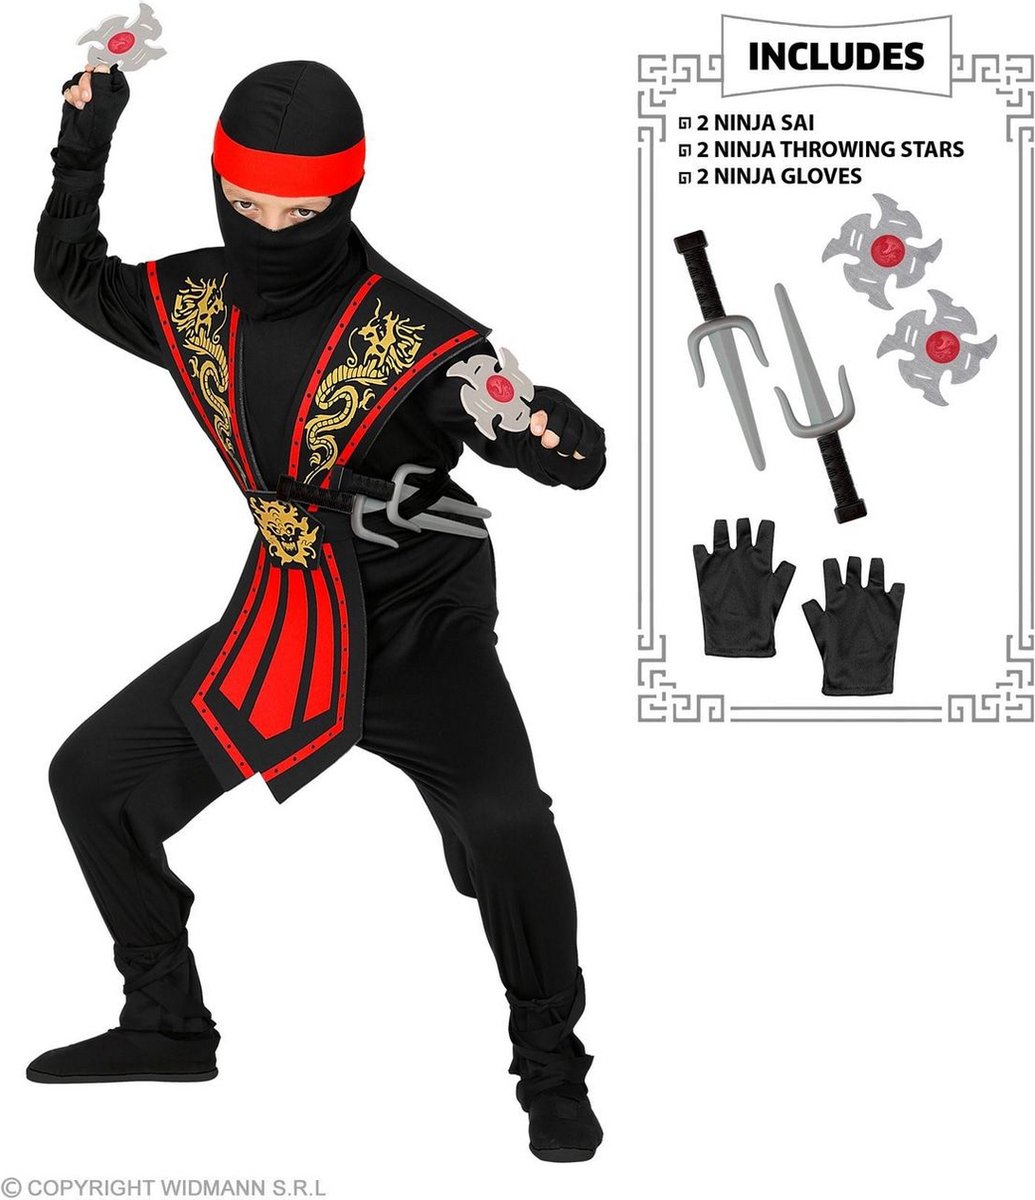 Widmann - Ninja & Samurai Kostuum - Vurige Draken Ninja Met Wapens Kind - Jongen - rood,zwart - Maat 140 - Carnavalskleding - Verkleedkleding